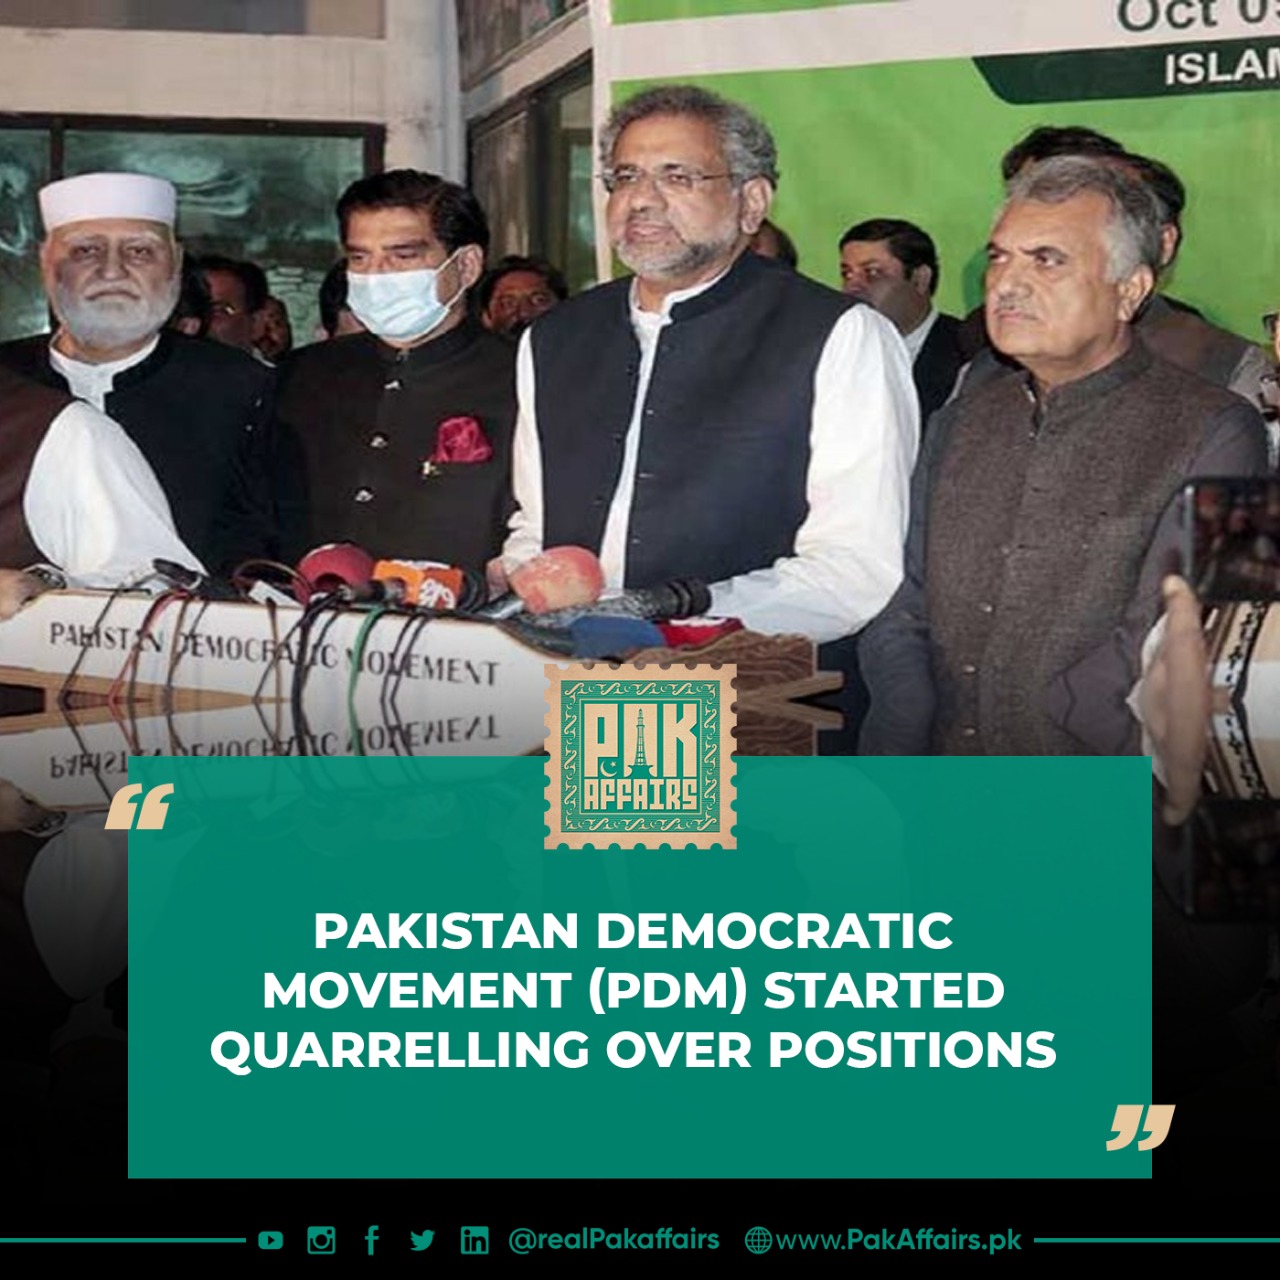 Pakistan Democratic Movement (PDM) started quarreling over positions.